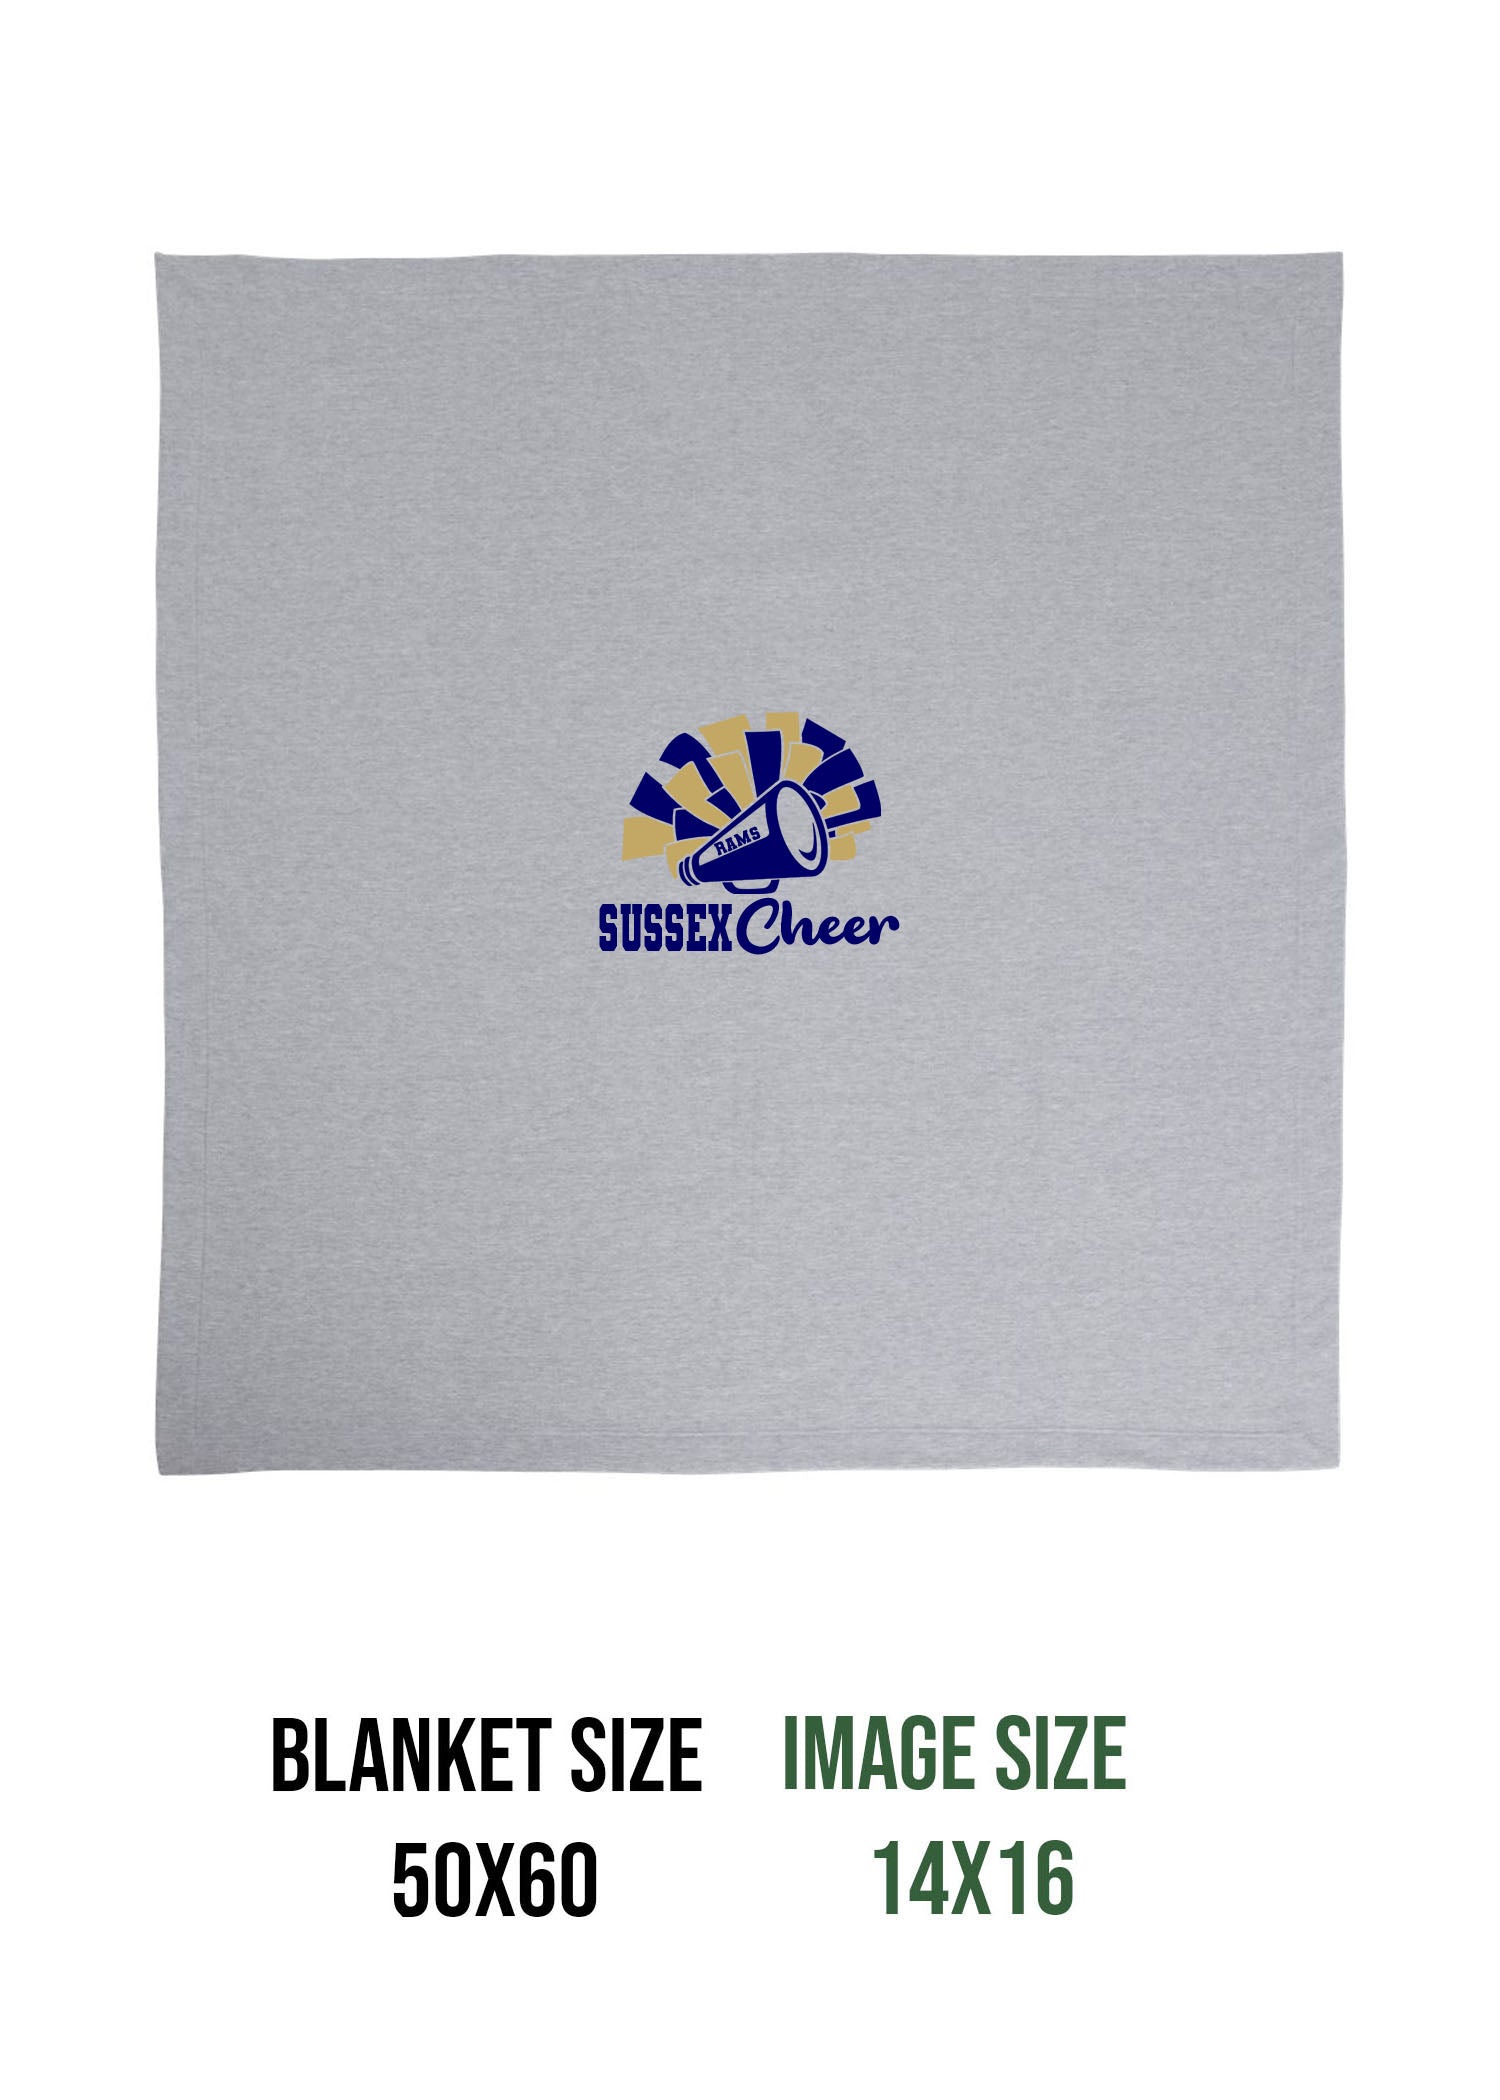 Sussex Middle Cheer Design 2 Blanket